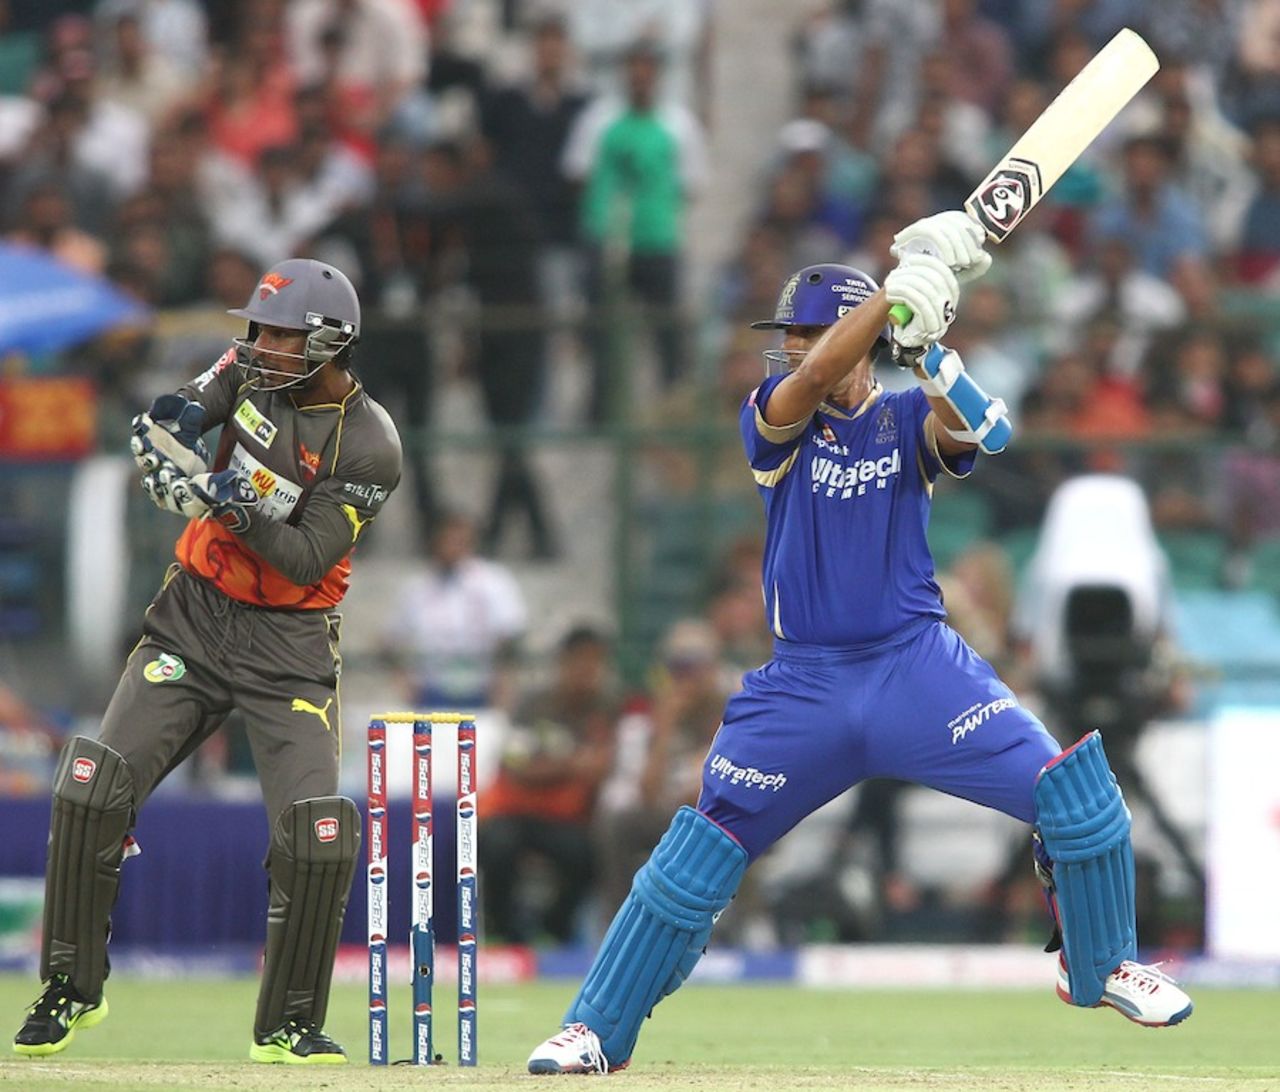 Rahul Dravid cuts during his innings of 36, Rajasthan Royals v Sunrisers Hyderabad, IPL, Jaipur, April 27, 2013